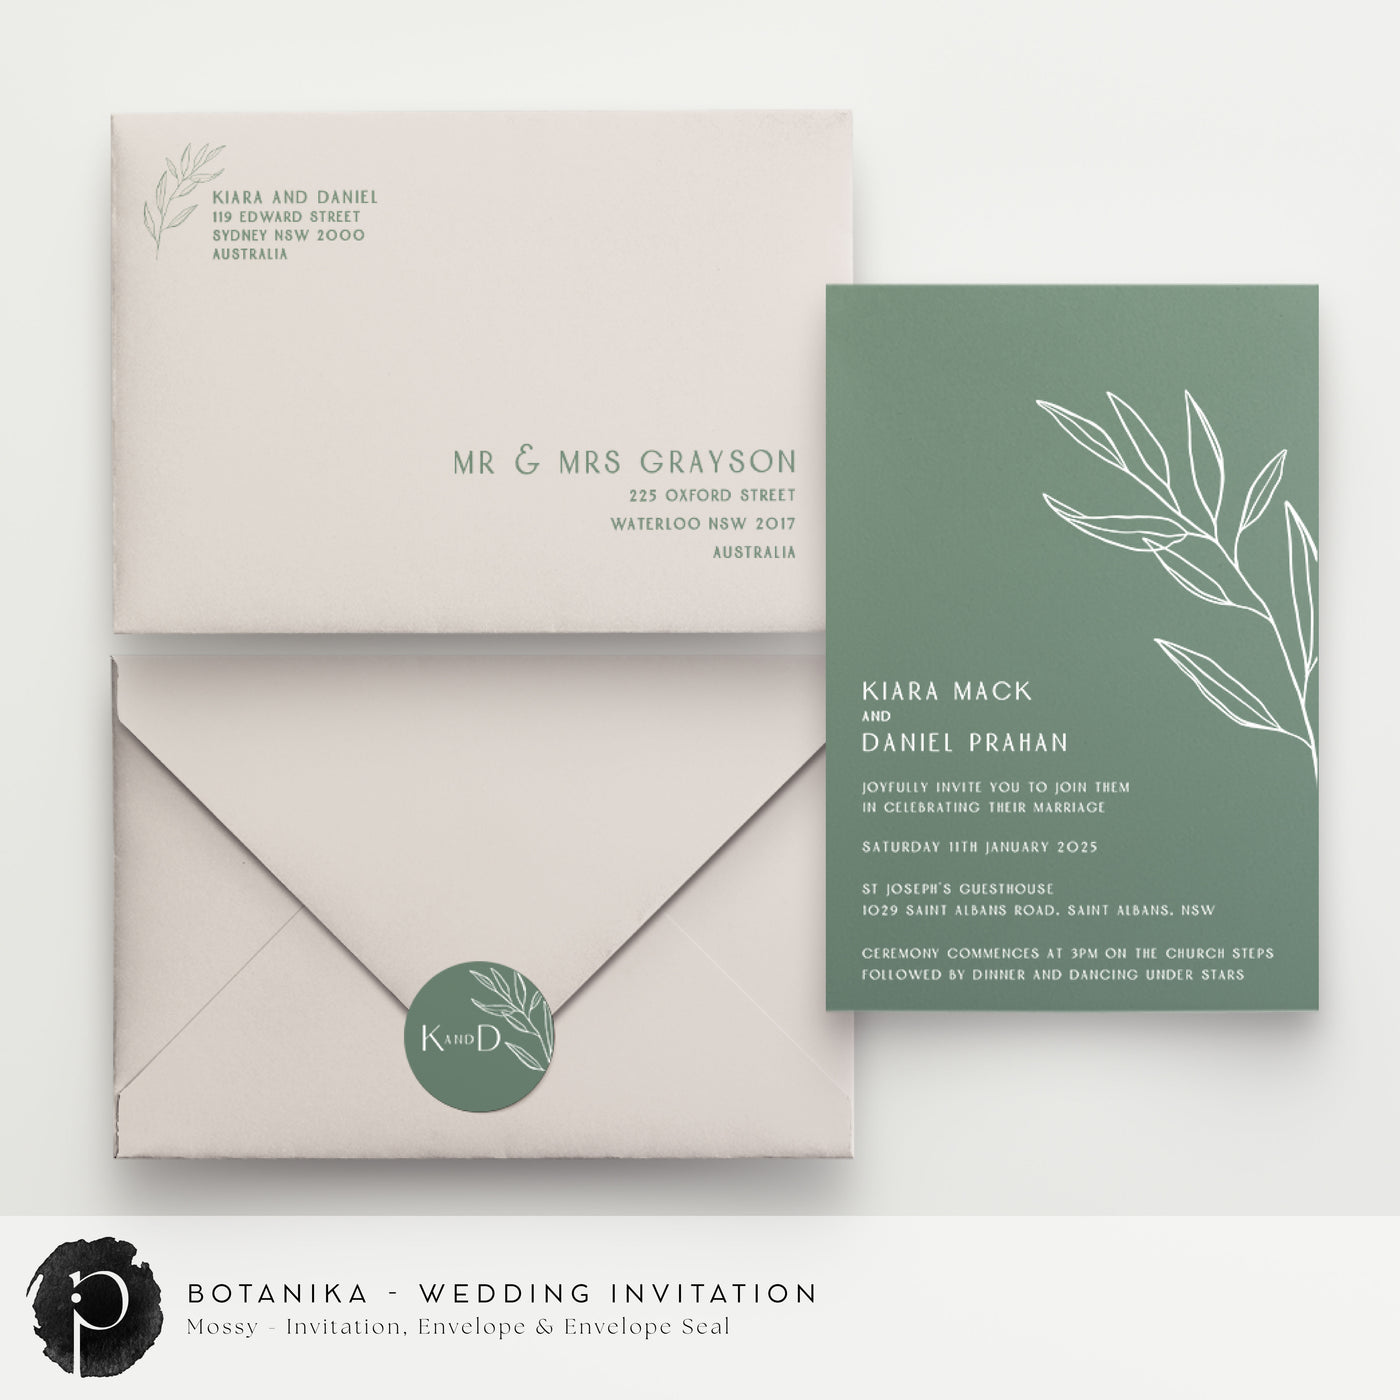 Botanika - Wedding Invitations